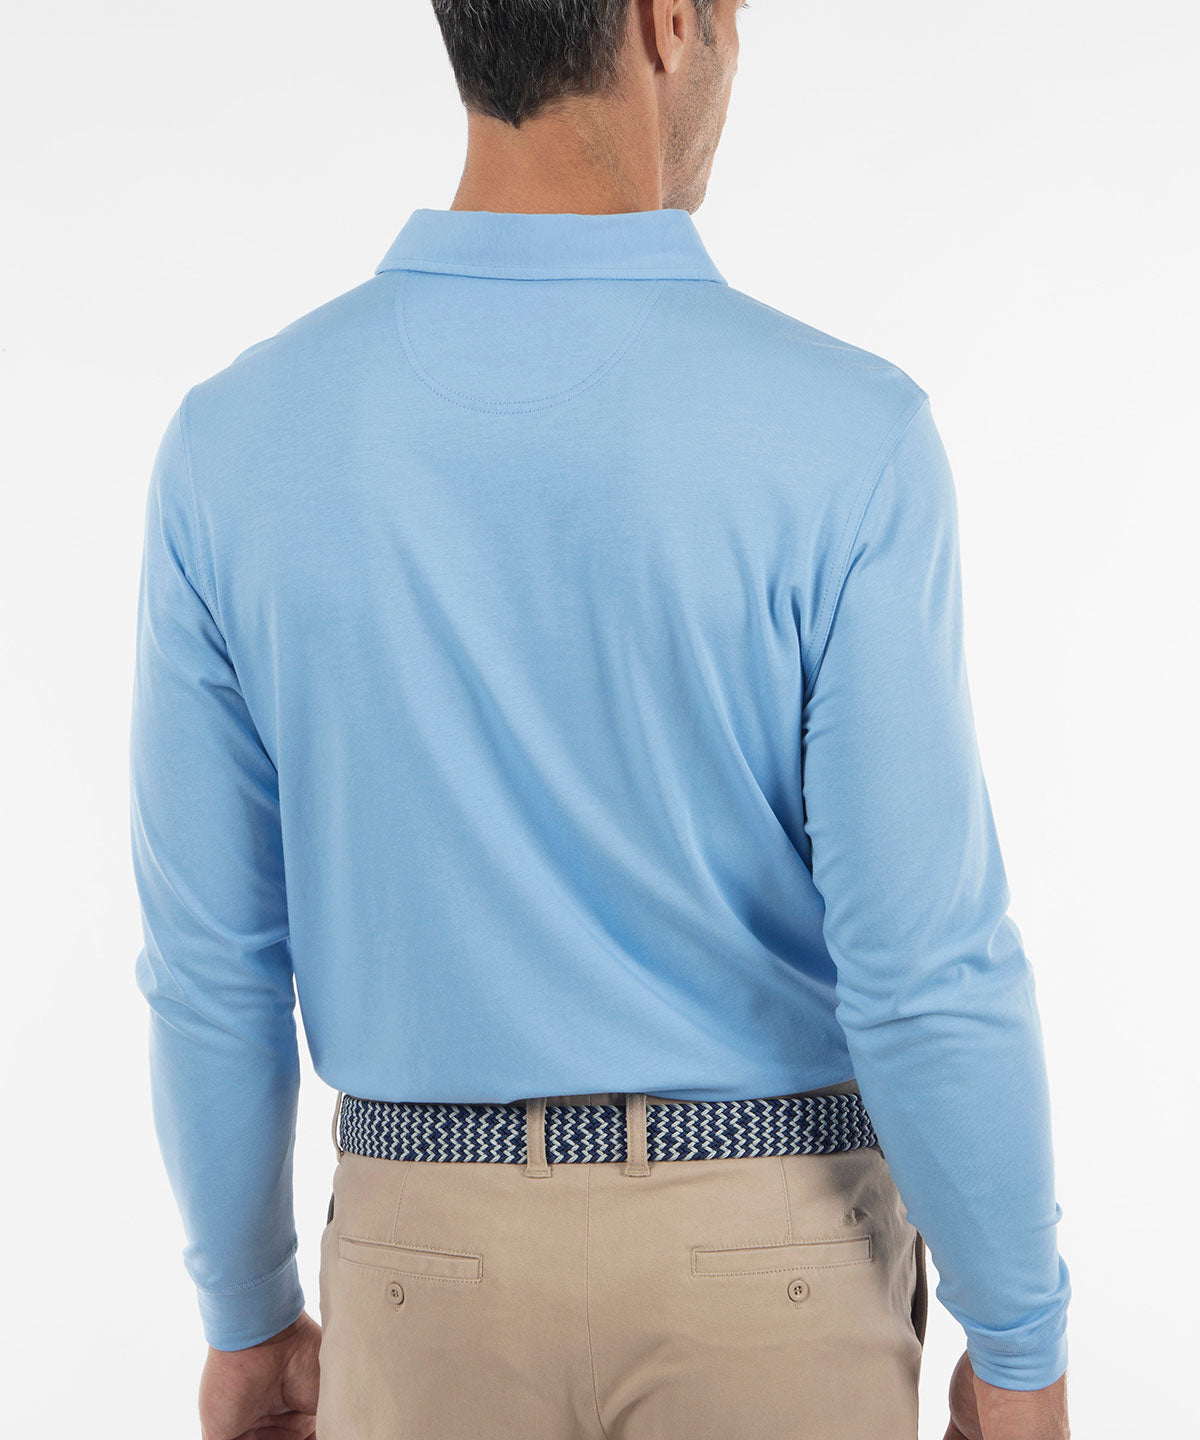 Men's Blue Shirts - Dress Shirts, Sweaters, T-Shirts and Polos - Express